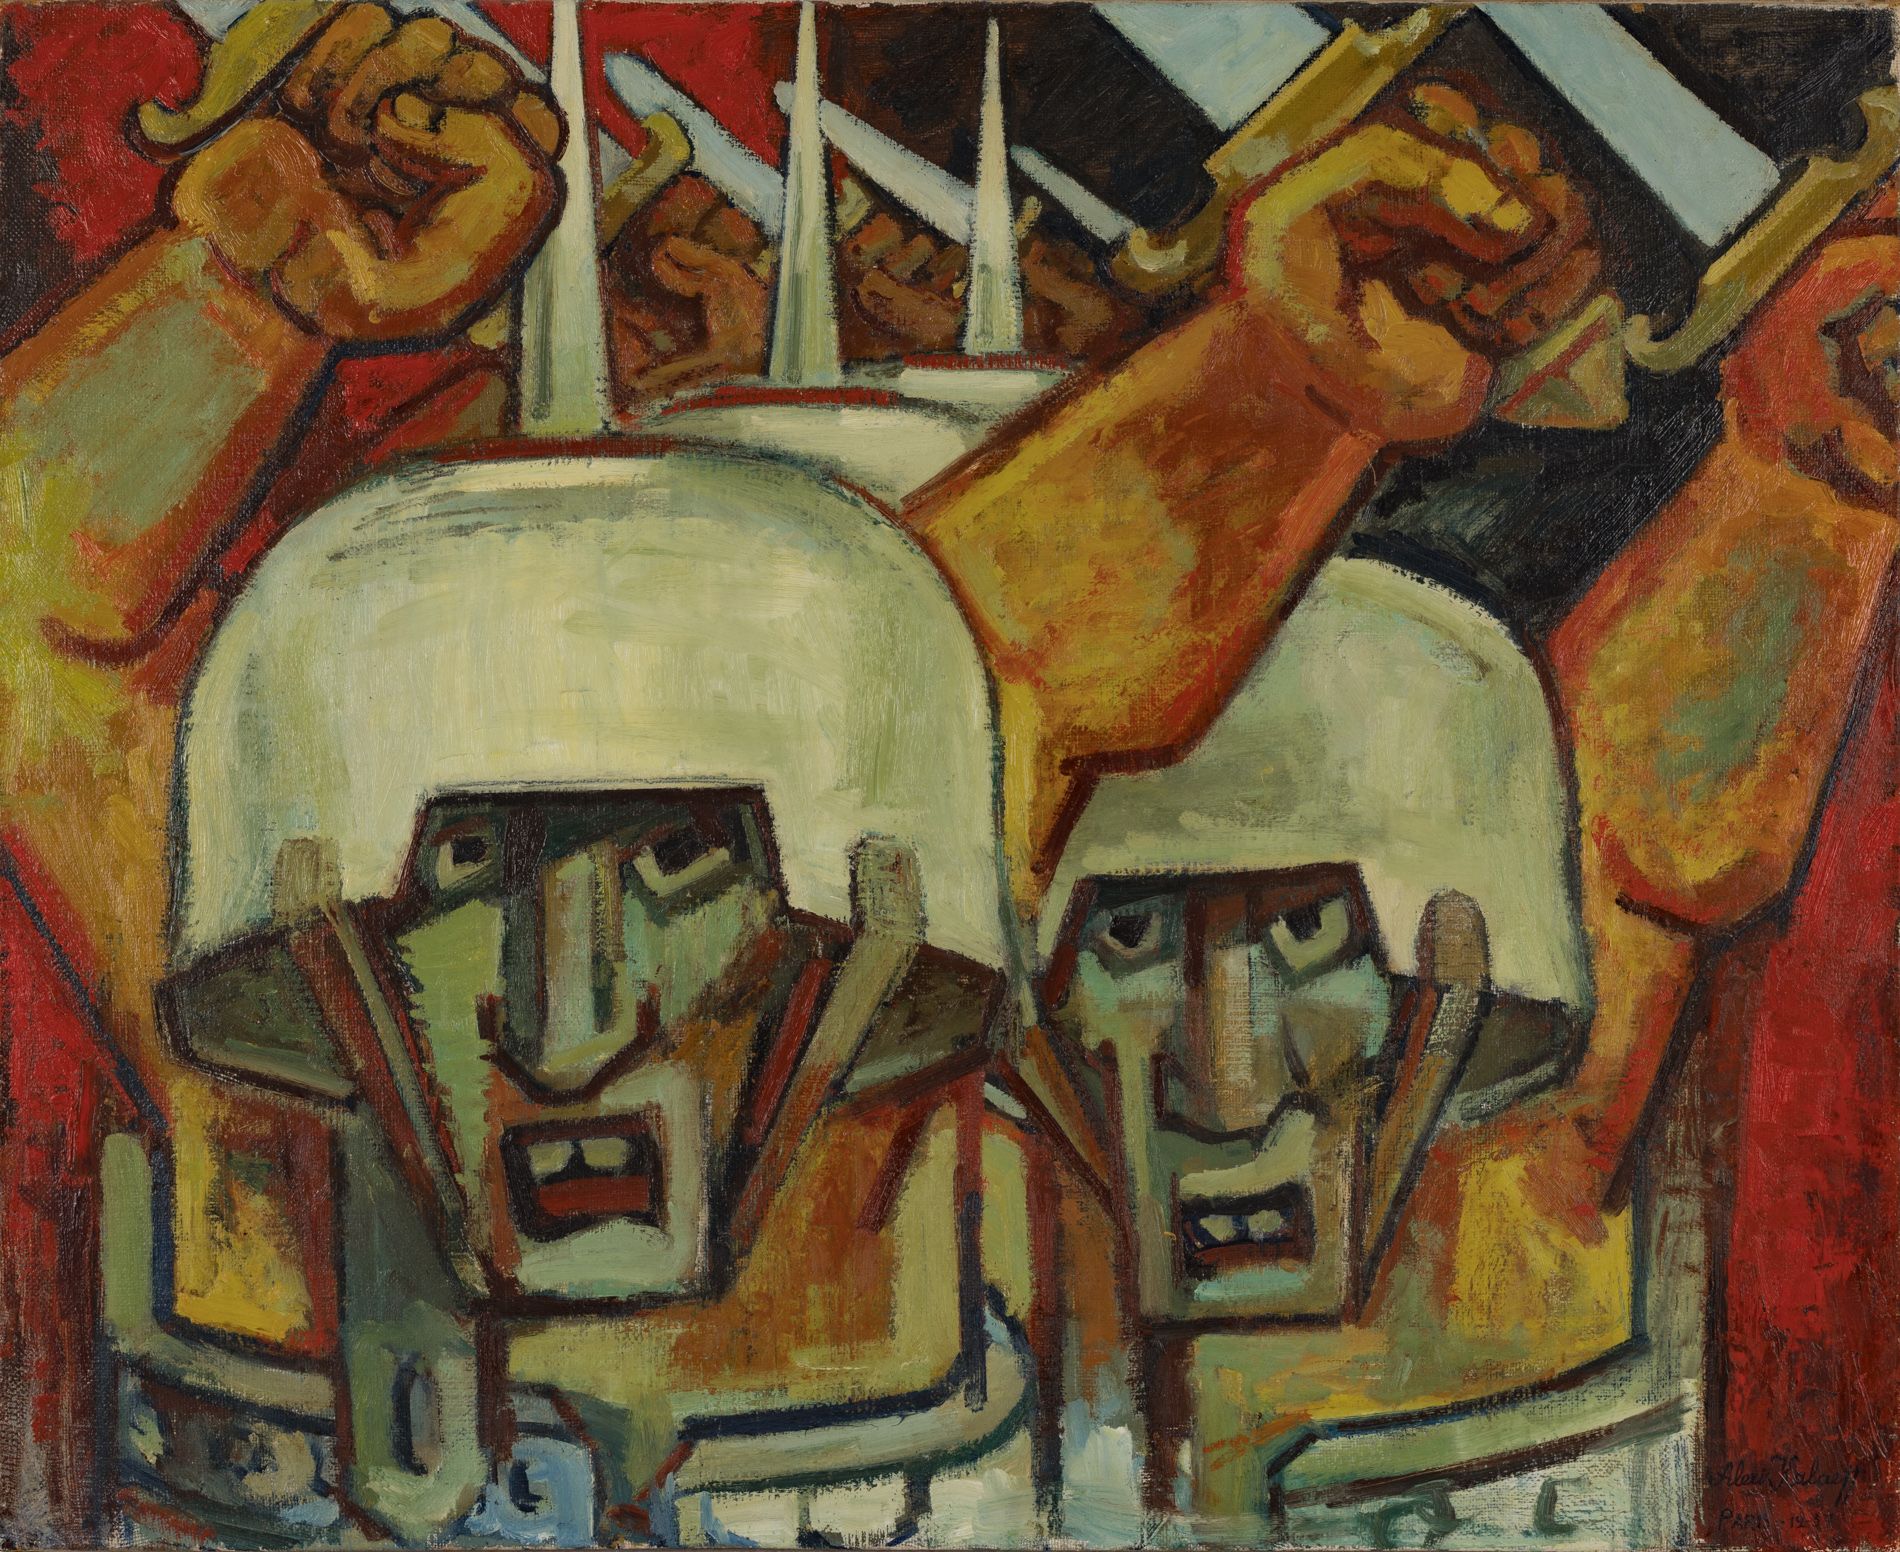 Null 亚历克西斯-卡拉夫(1902-1978)
战争 
布面油画，右下方有签名和日期。
尺寸：80.5 x 99.5厘米